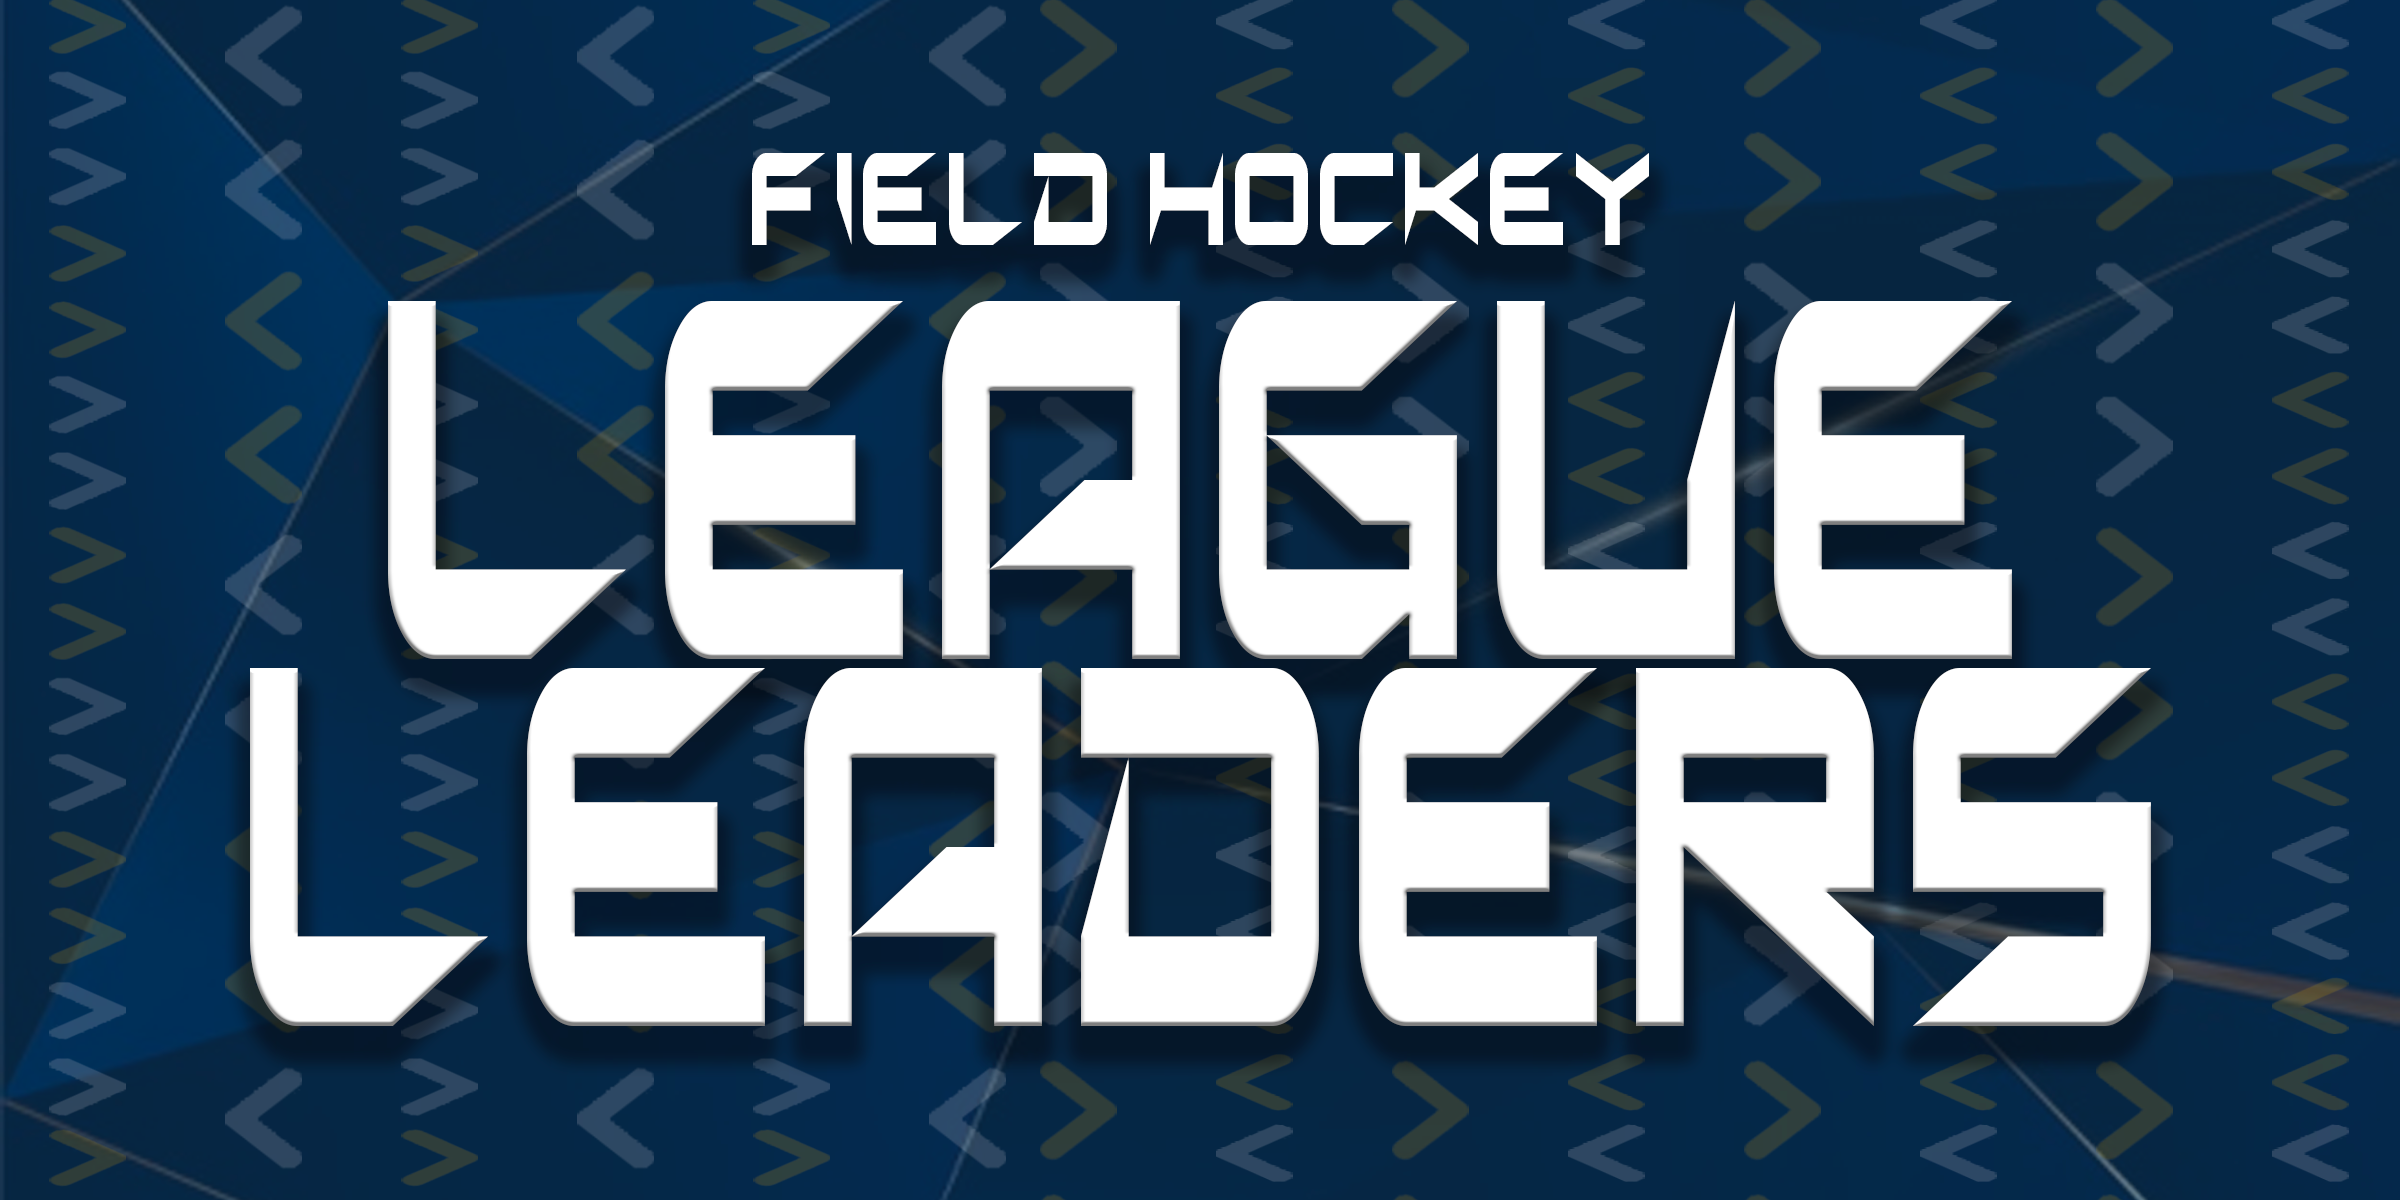 2022 Hockomock Field Hockey League Leaders